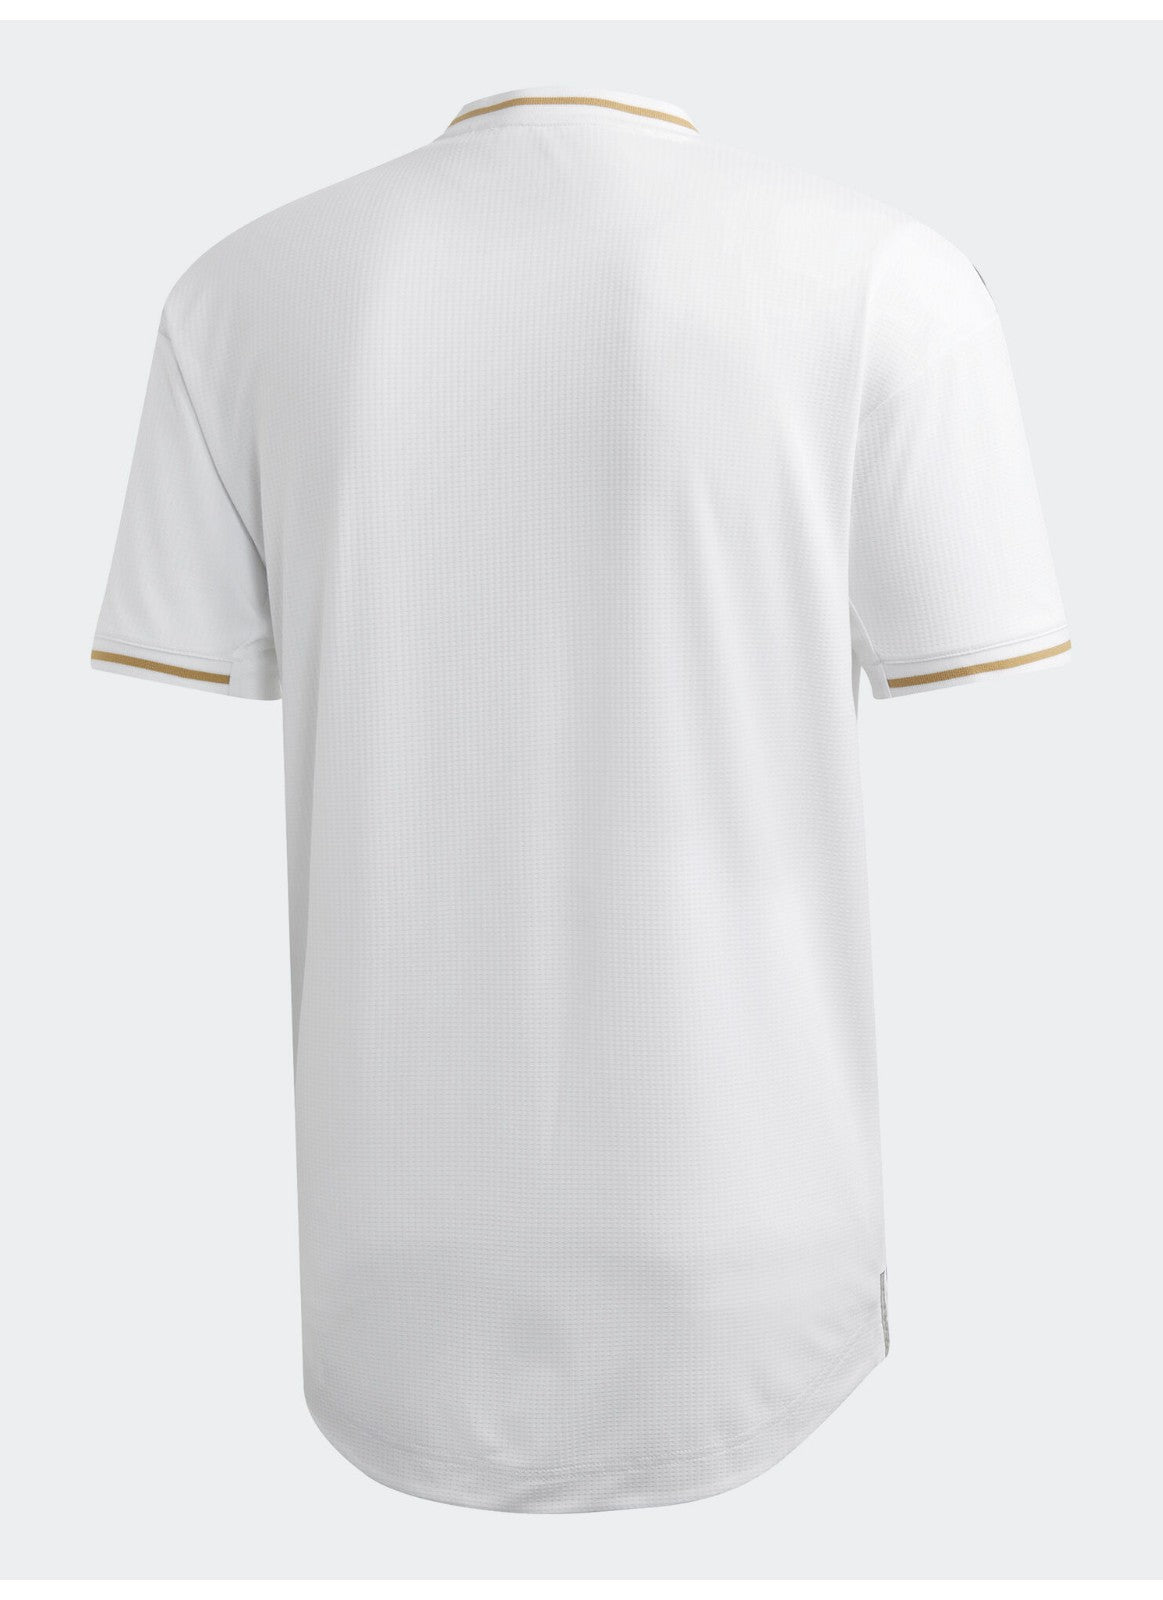 Camisa Real Madrid Retrô Home 2019/20 Torcedor Adidas Masculina - Branca